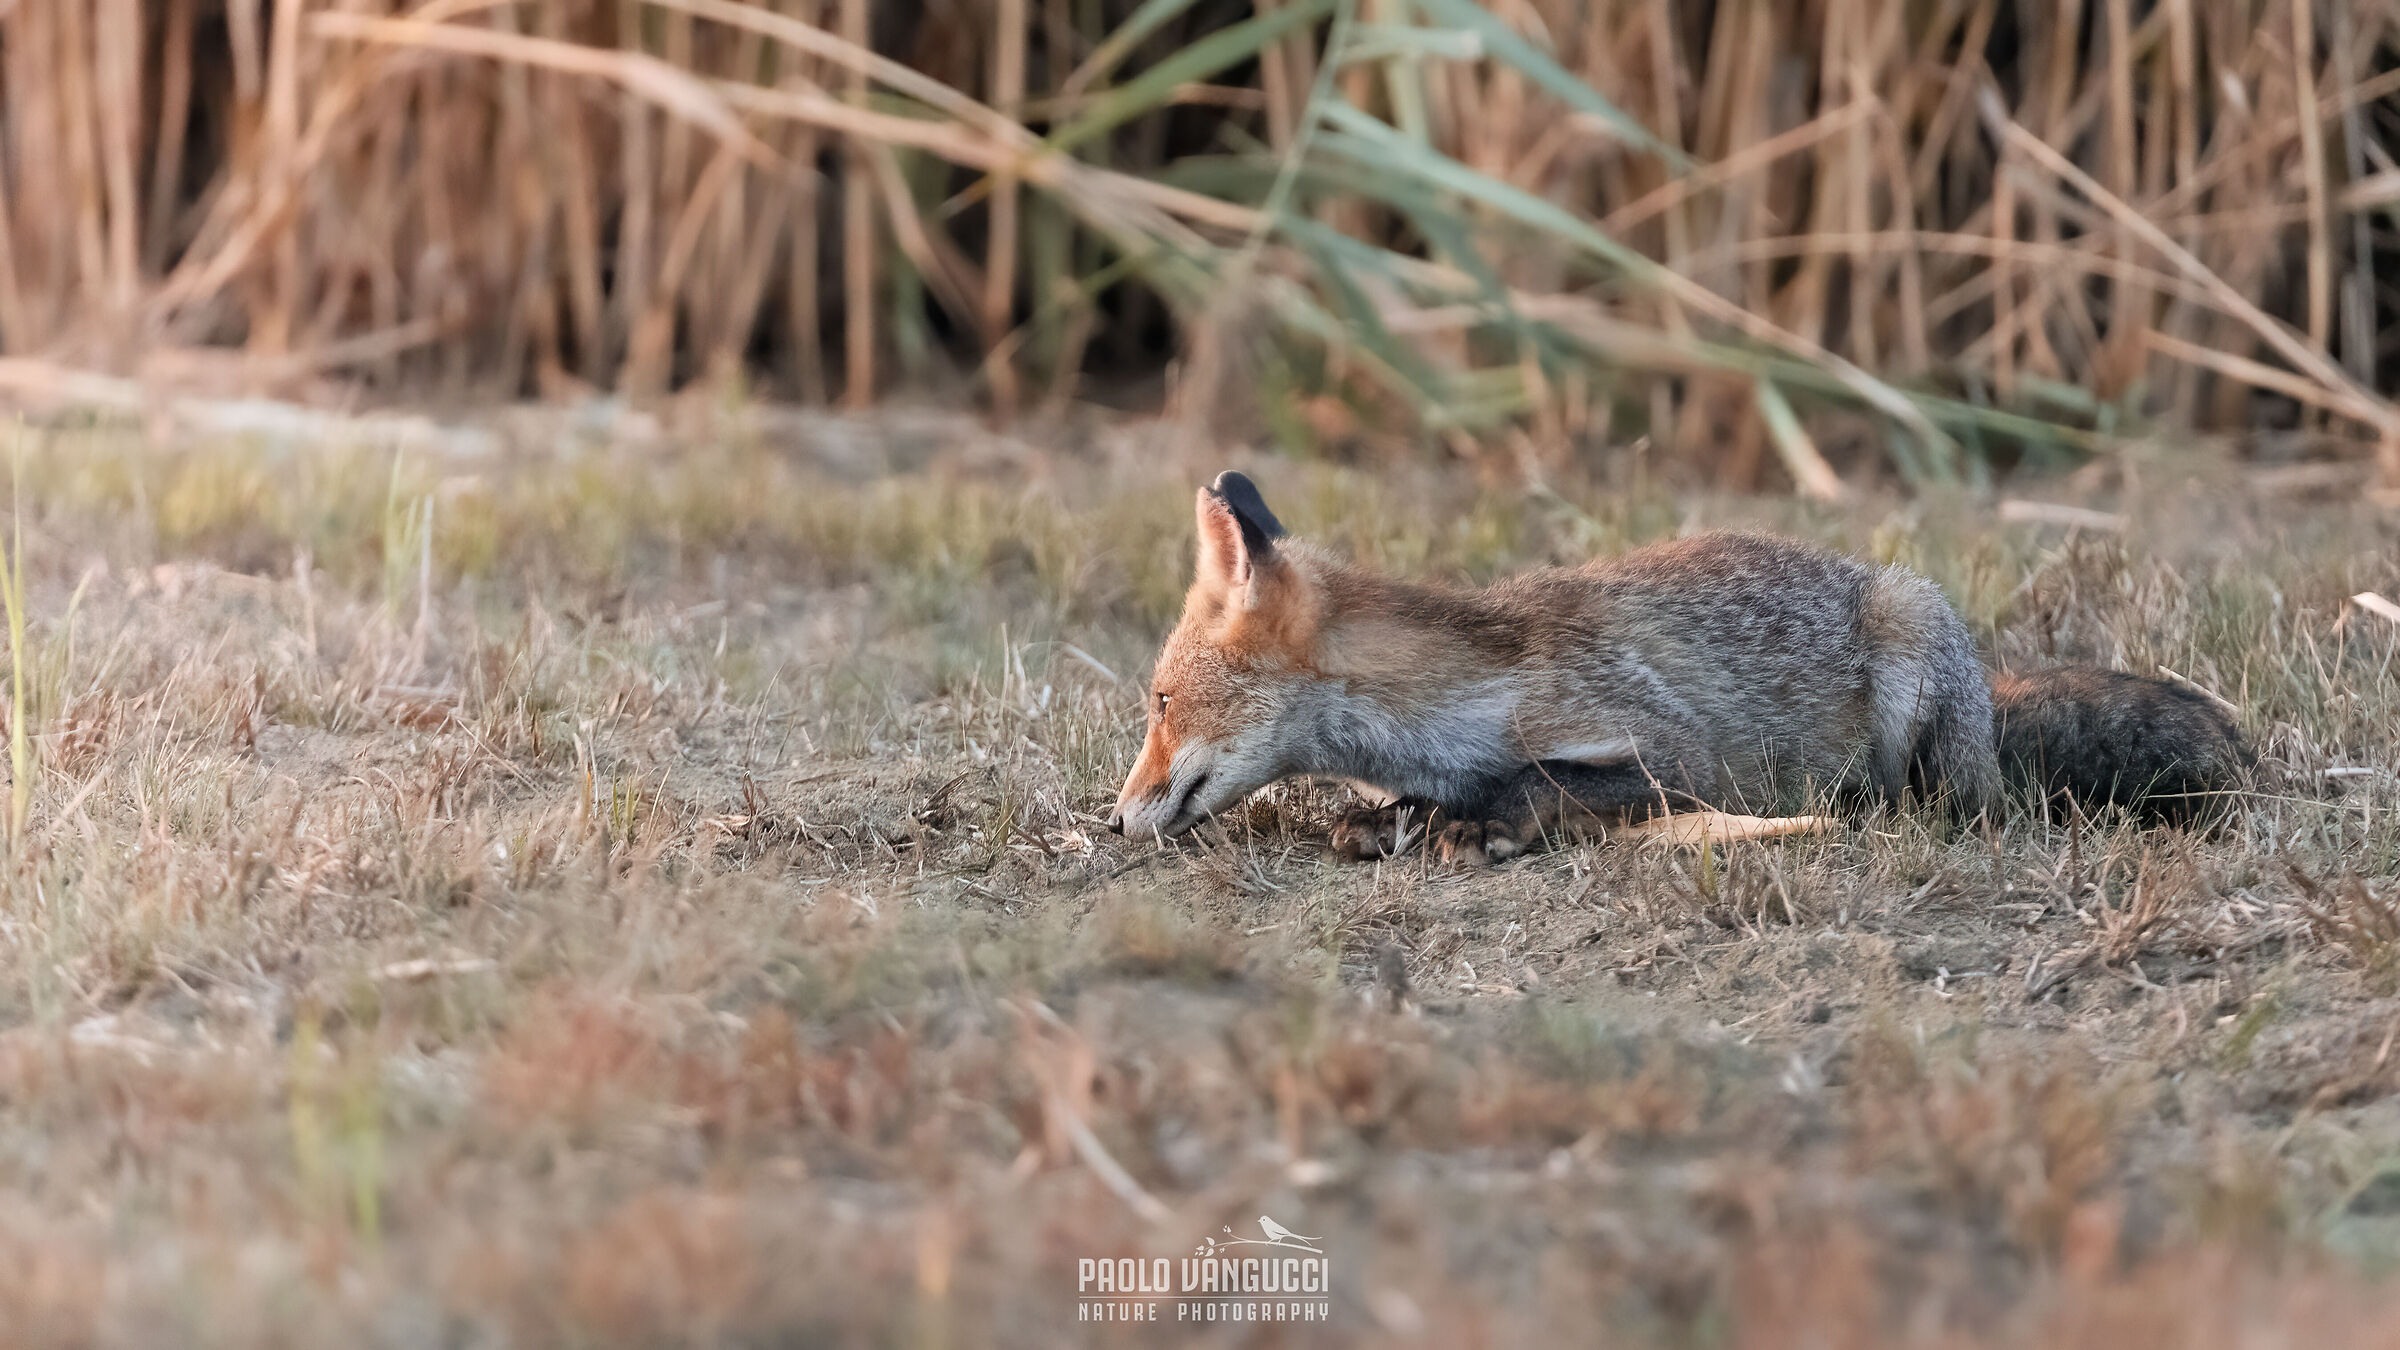 Let's enjoy this sunset (Red fox - Vulpes vulpes)...